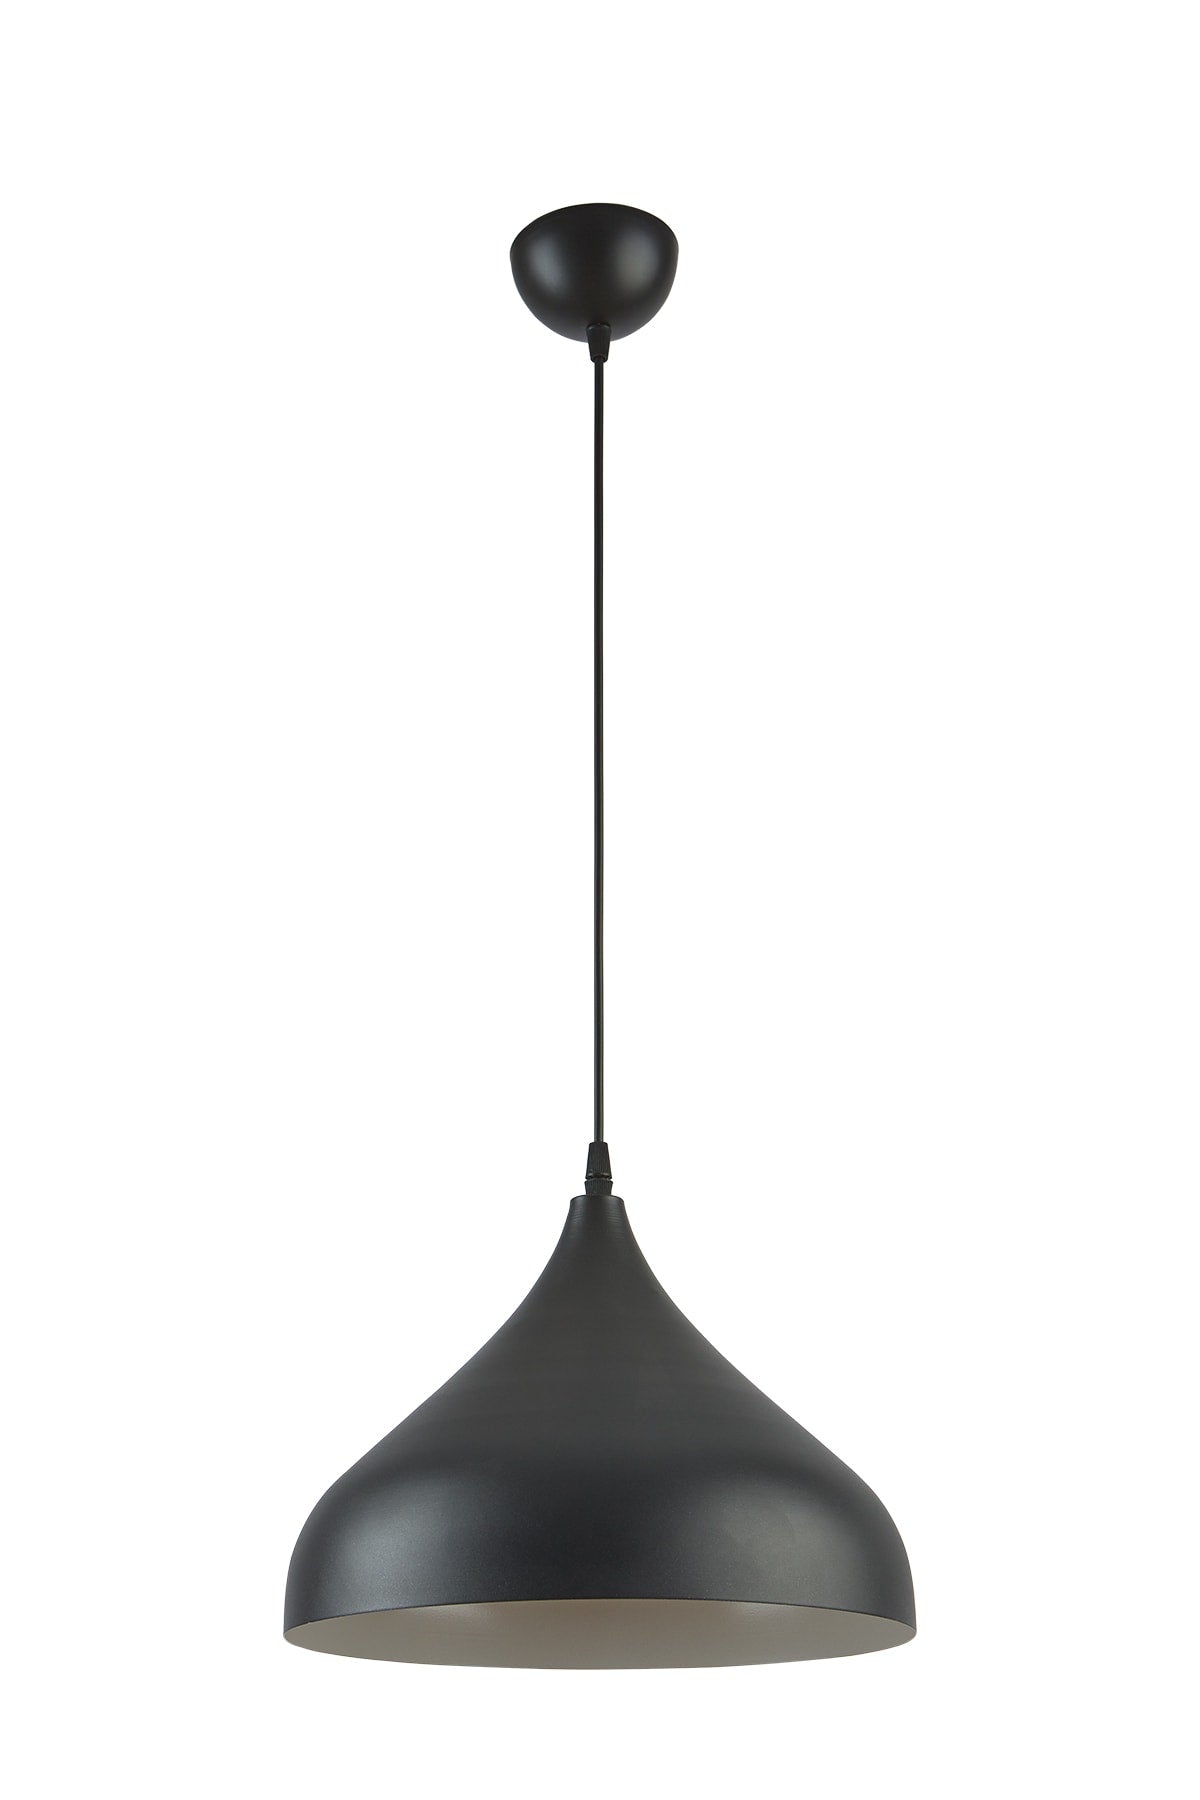 Reyes Special Design Modern Living Room - Kitchen - Cafe Black Inside White Single Pendant Lamp Chandelier